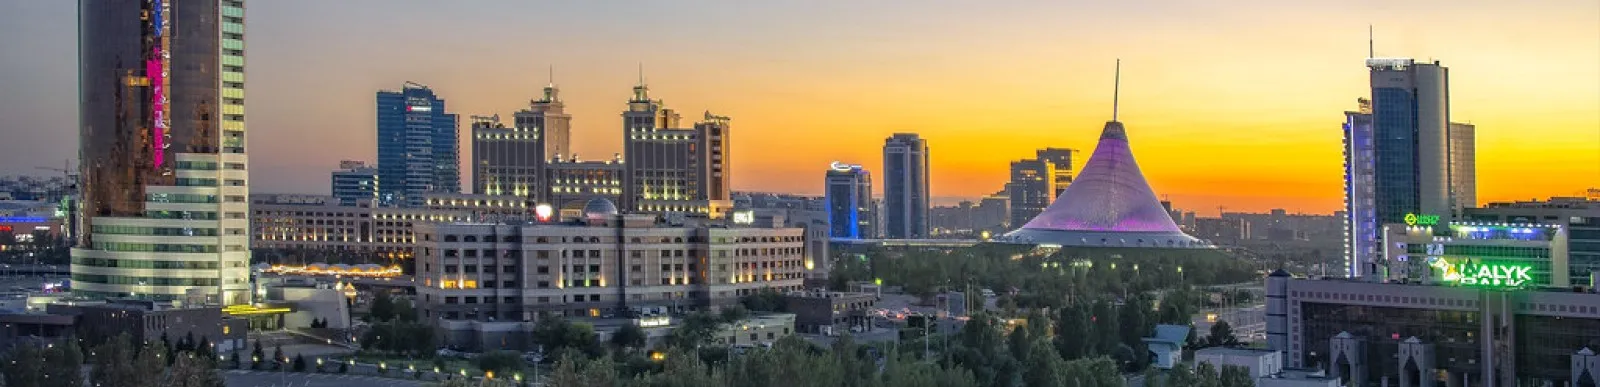 Kazakhstan Banner Image